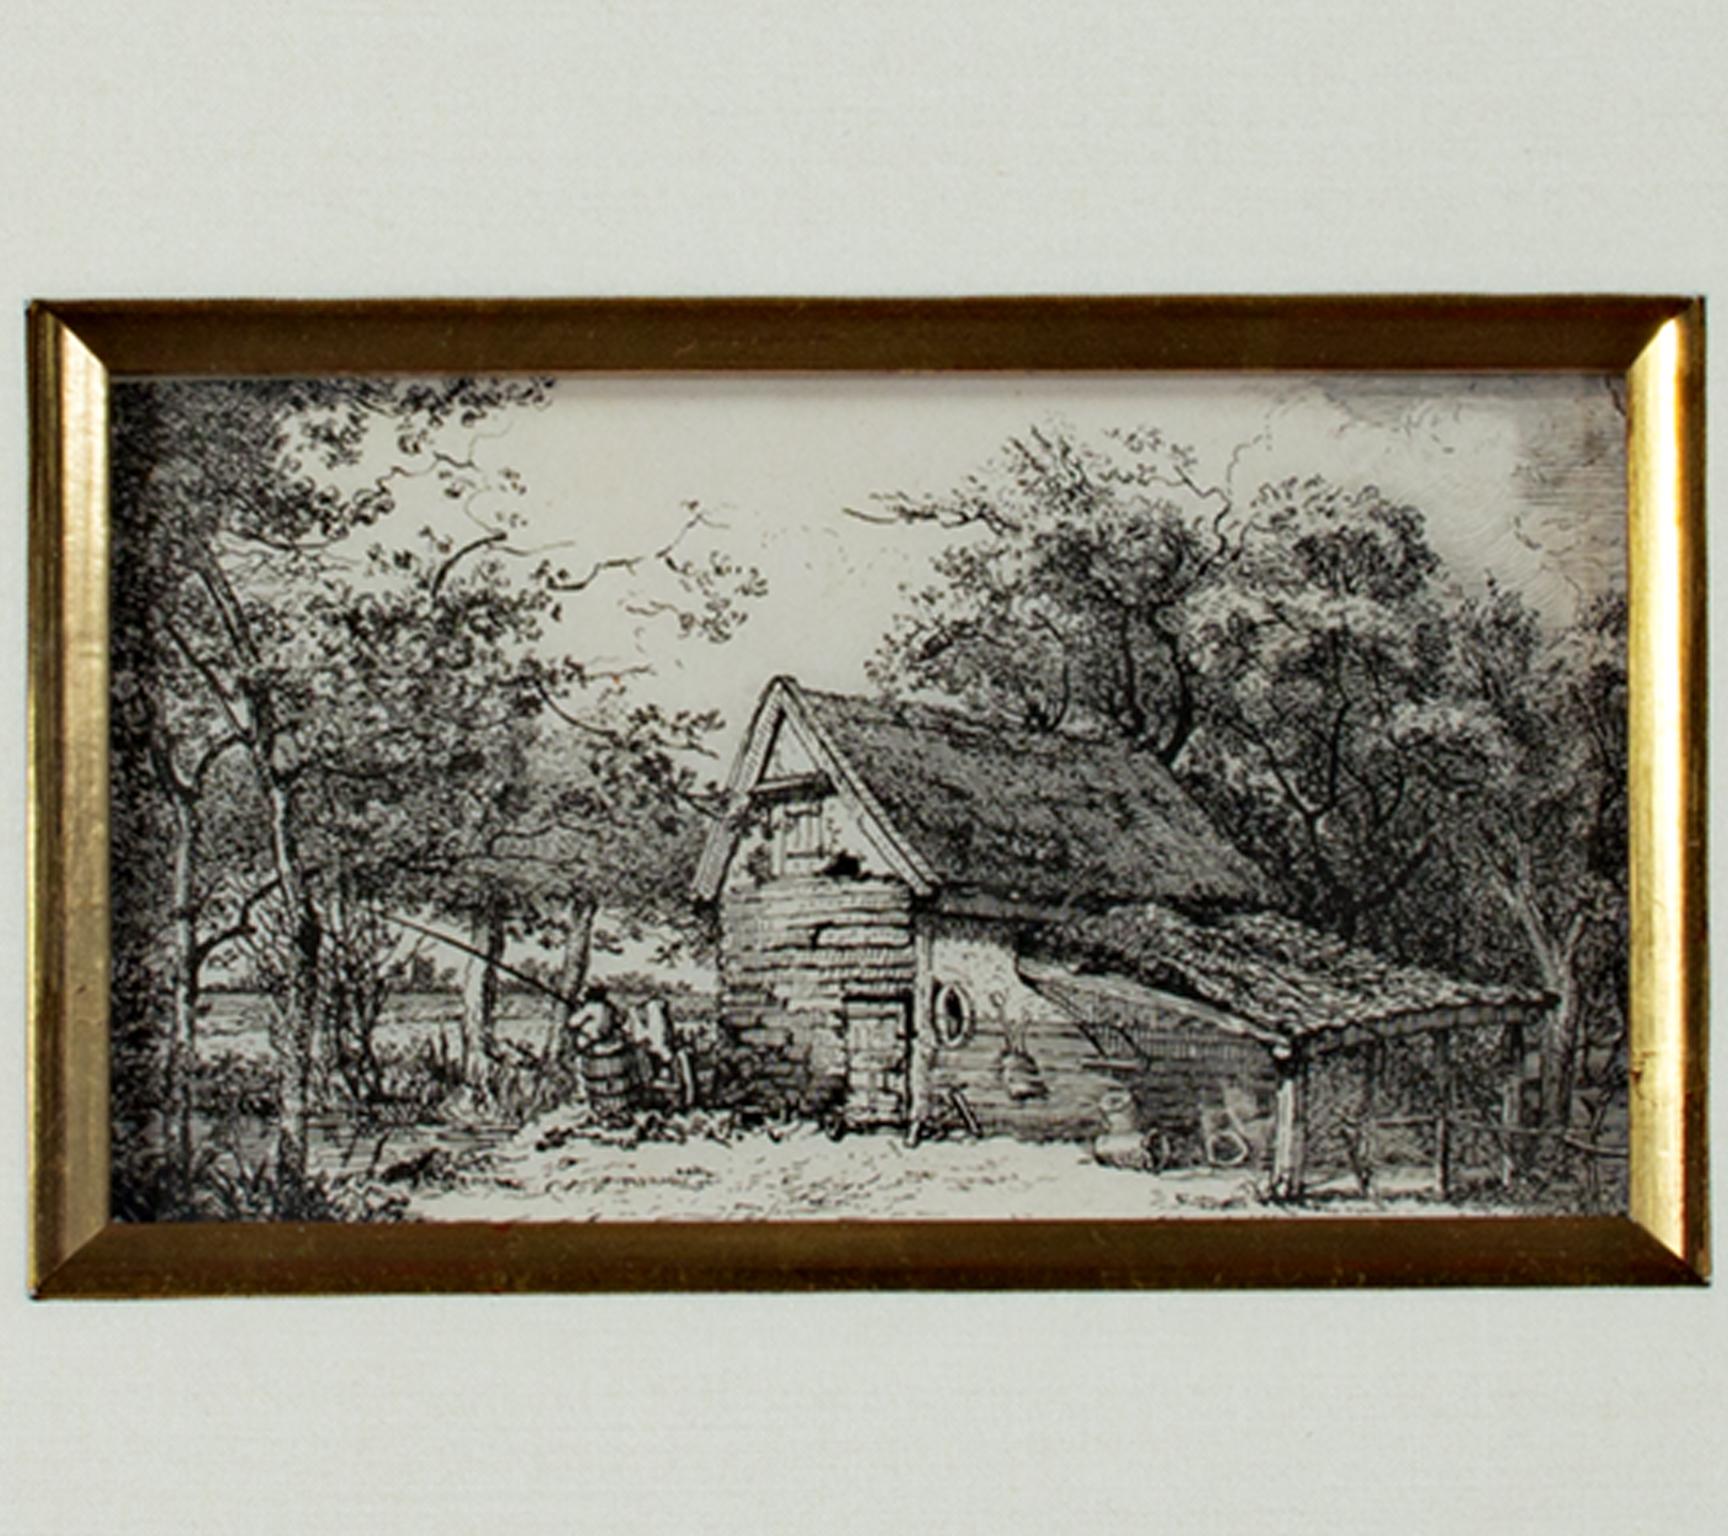 John Thomas Smith Landscape Print - 18th century landscape etching pastoral house nature scene detailed ink trees